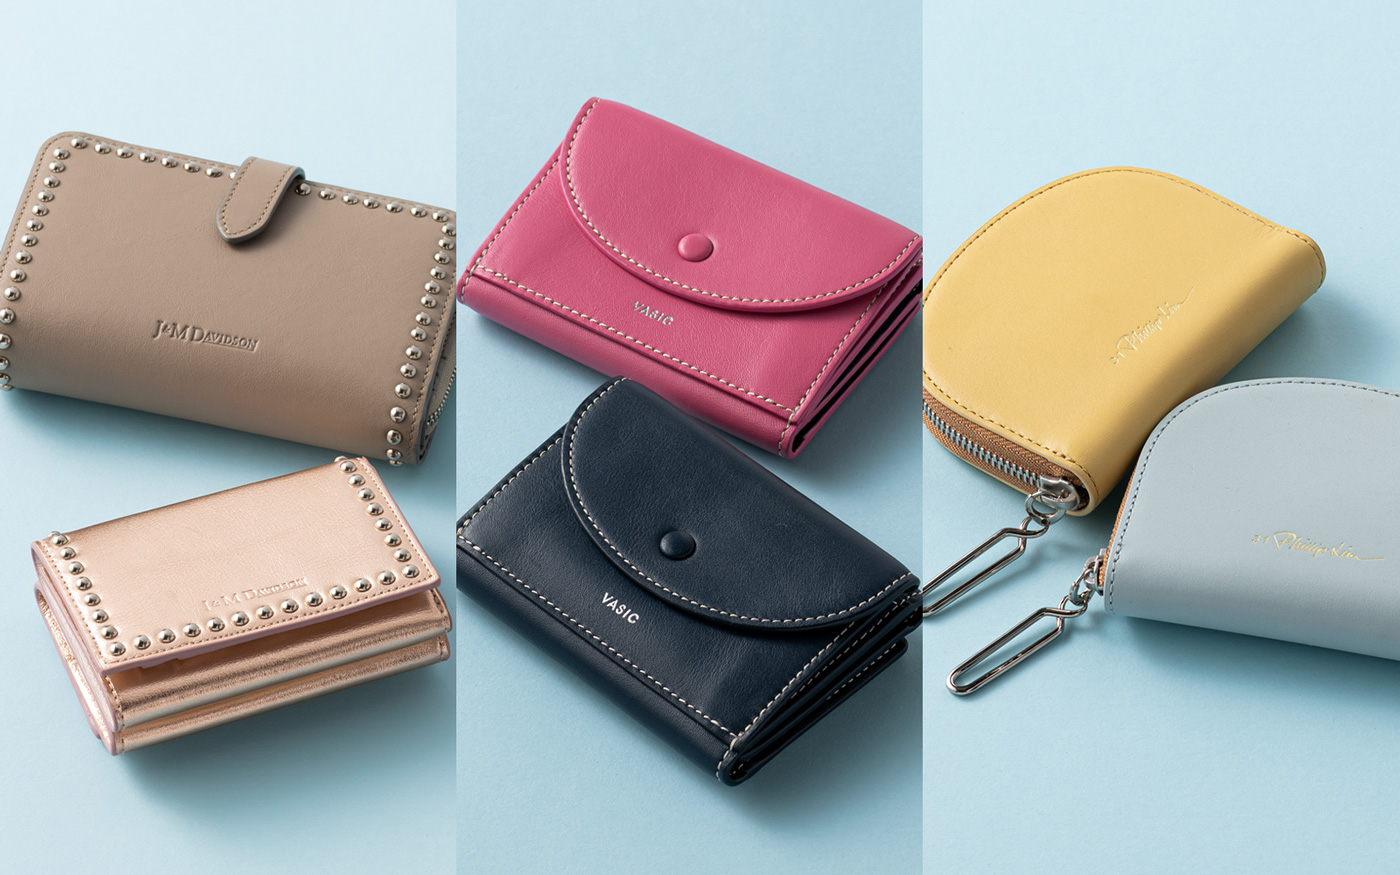 【VASIC、J&M DAVIDSON…】バッグが人気のブランドは「お財布 